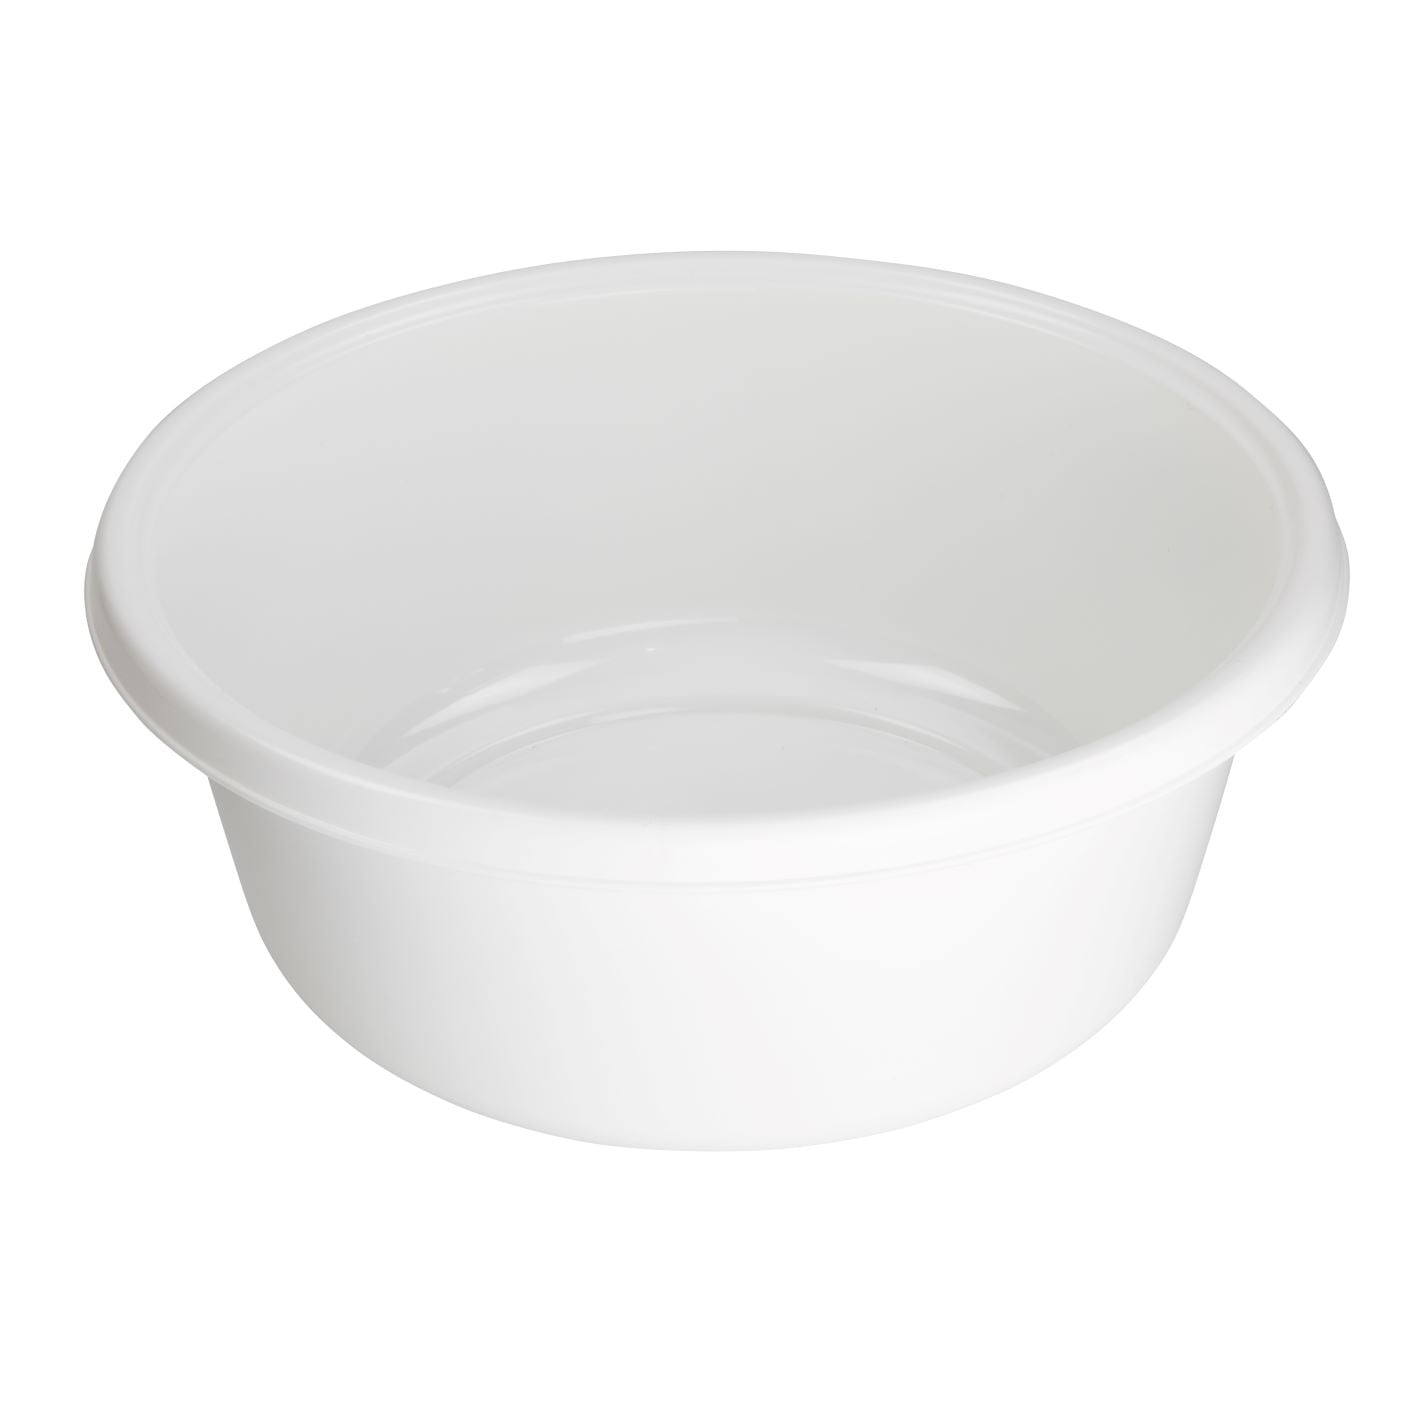 Idotry 4-Pack Baby Small Wash Basin, Gray Plastic Square Dish Pan, 8 Quart